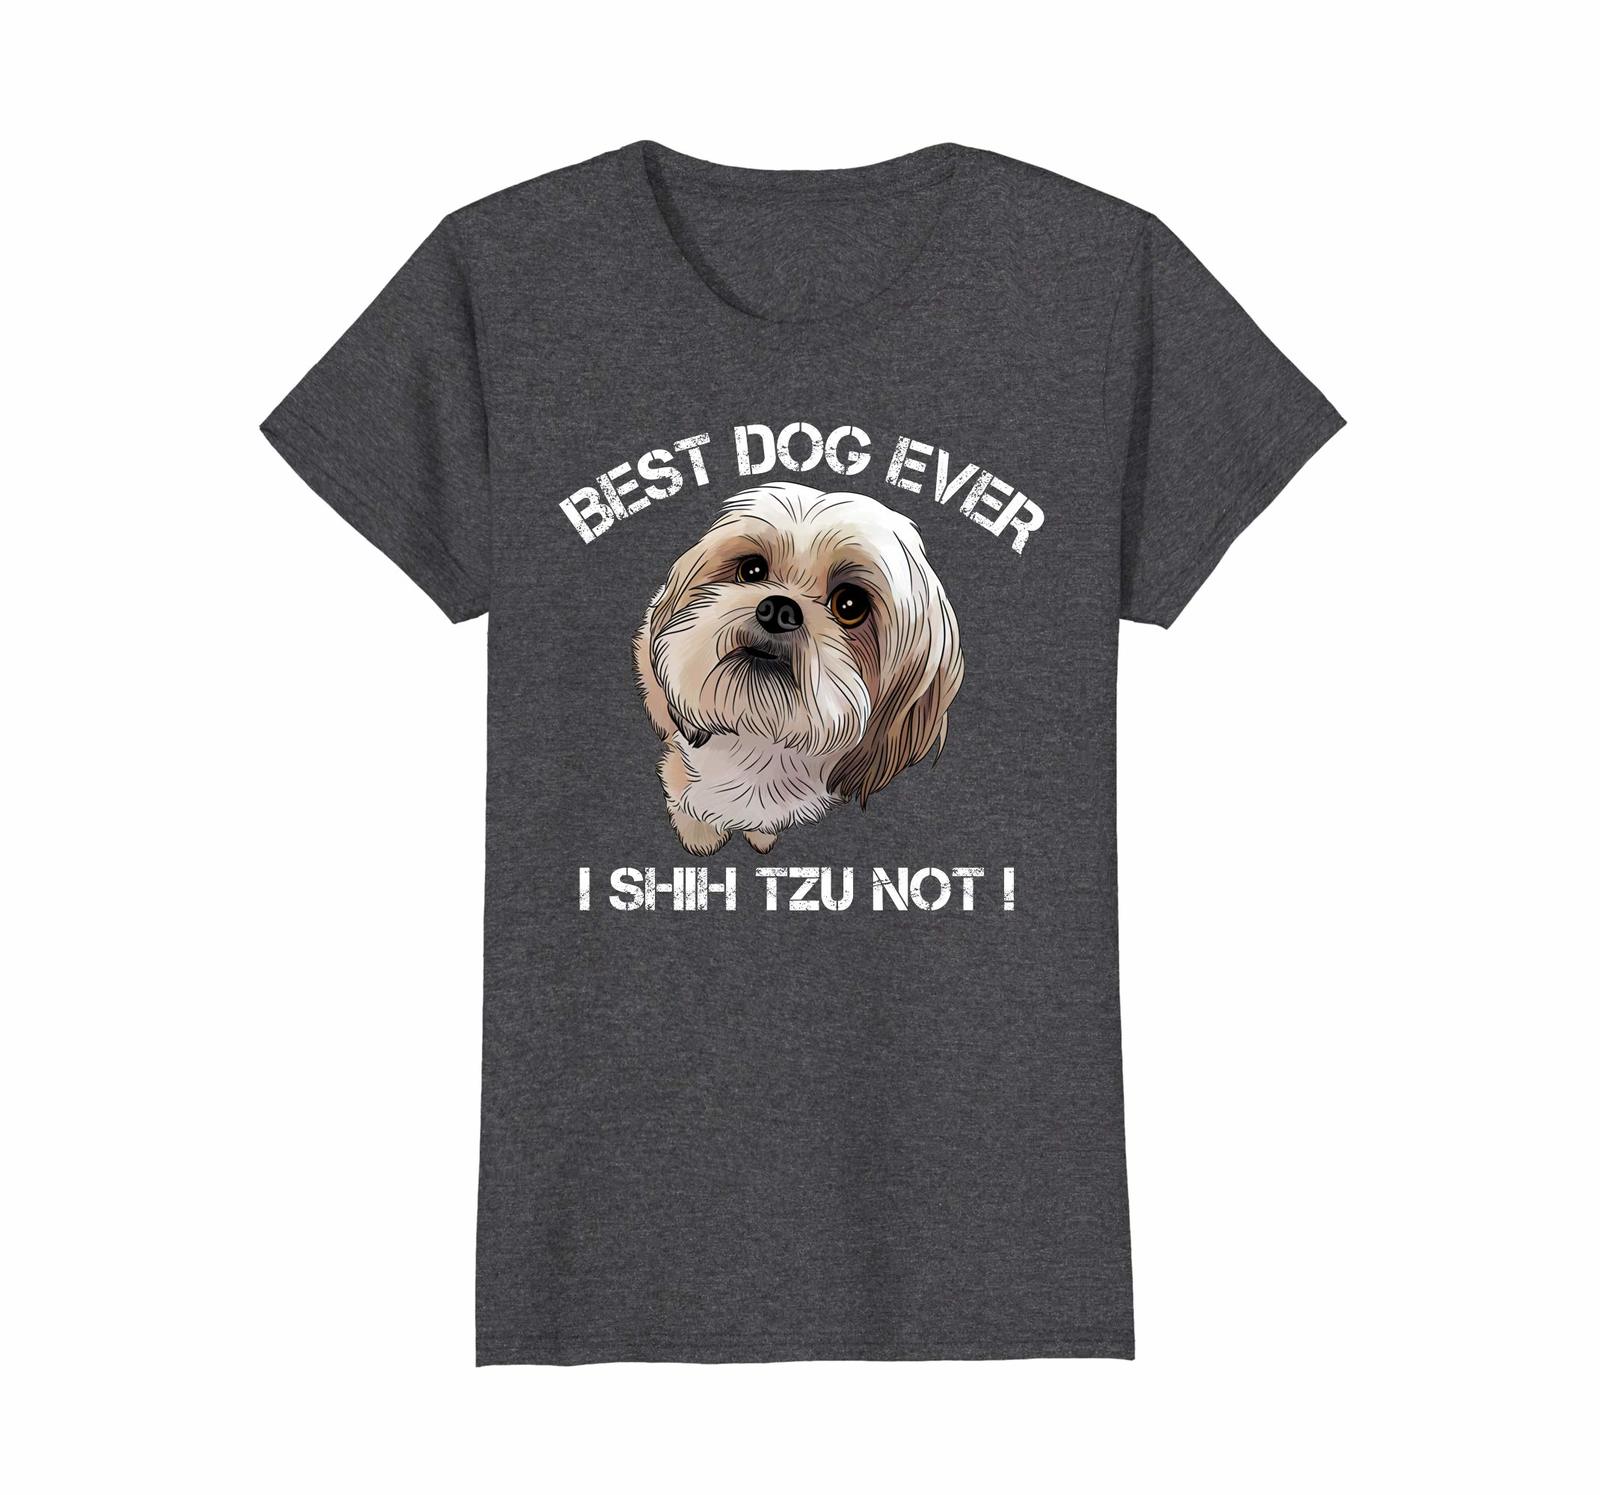 Dog Fashion - Shih Tzu T Shirt Funny Dog Pet Best Dog Ever Gift Birthday Wowen